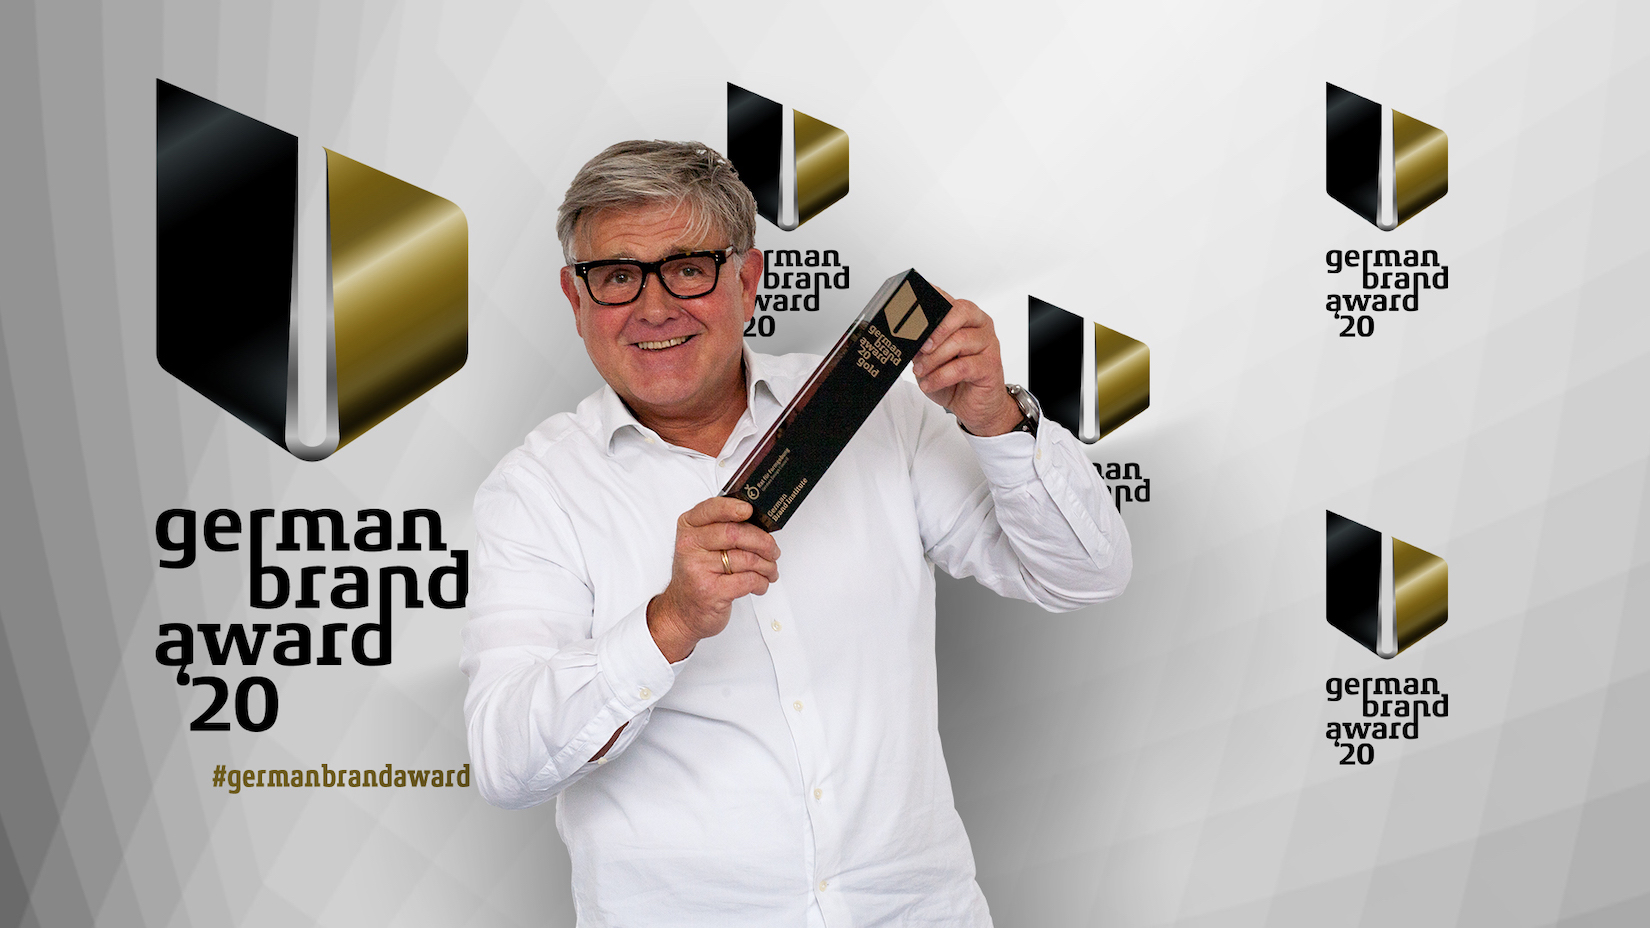 HARTING Peter Seipp German brand award